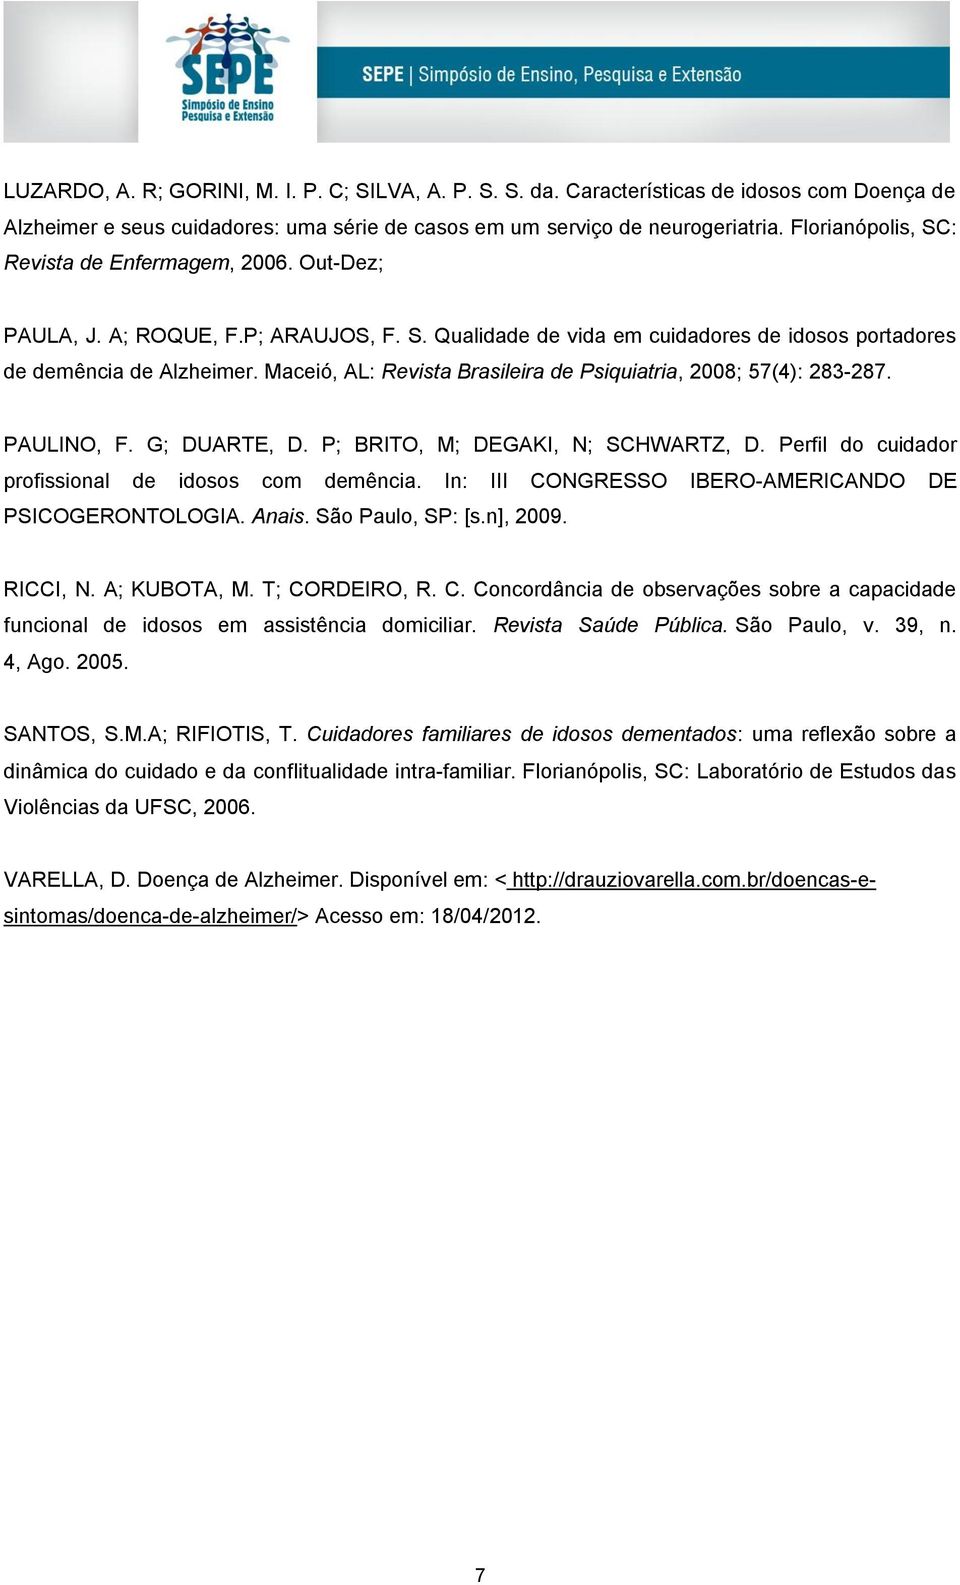 Maceió, AL: Revista Brasileira de Psiquiatria, 2008; 57(4): 283-287. PAULINO, F. G; DUARTE, D. P; BRITO, M; DEGAKI, N; SCHWARTZ, D. Perfil do cuidador profissional de idosos com demência.